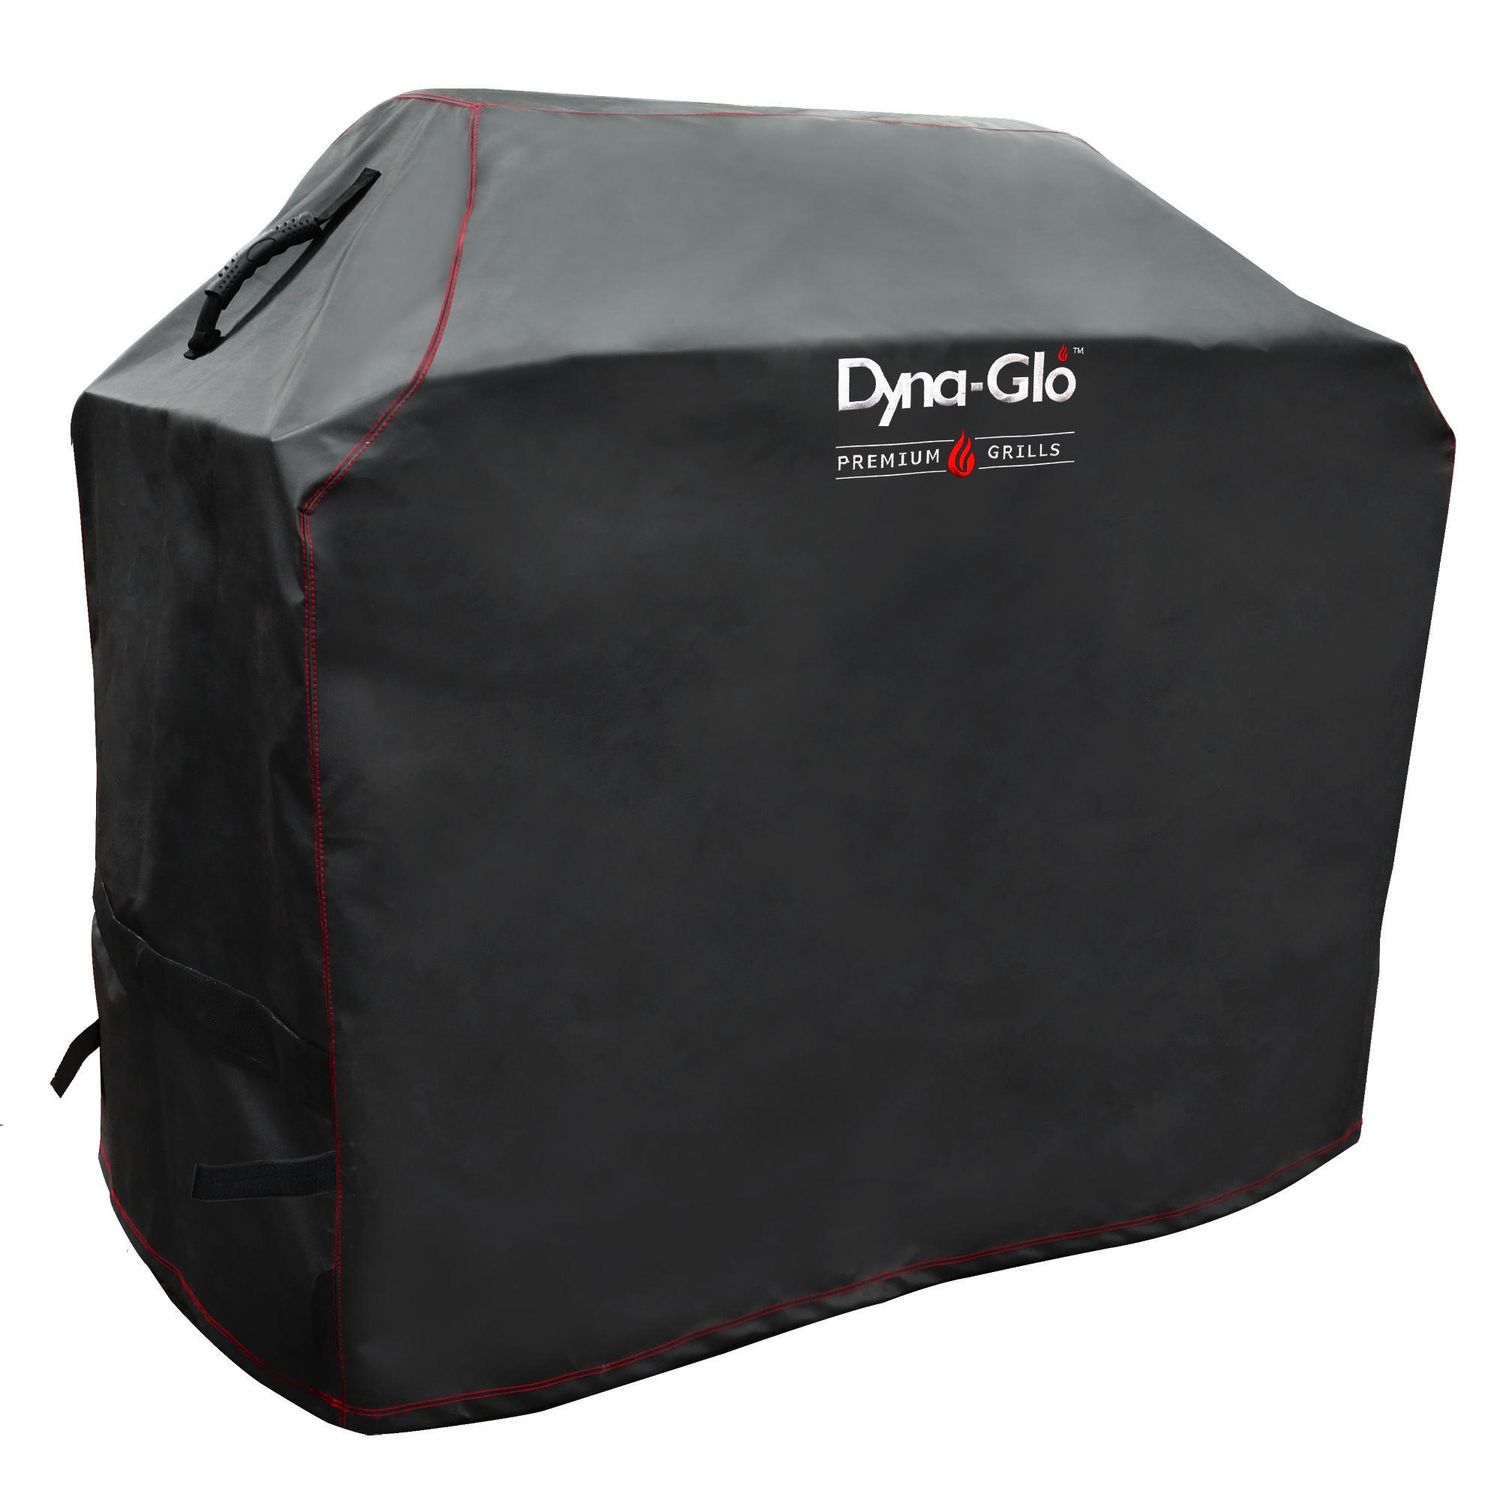 Dyna Glo DG500C Premium 5 Burner Gas Grill Cover Walmart Canada